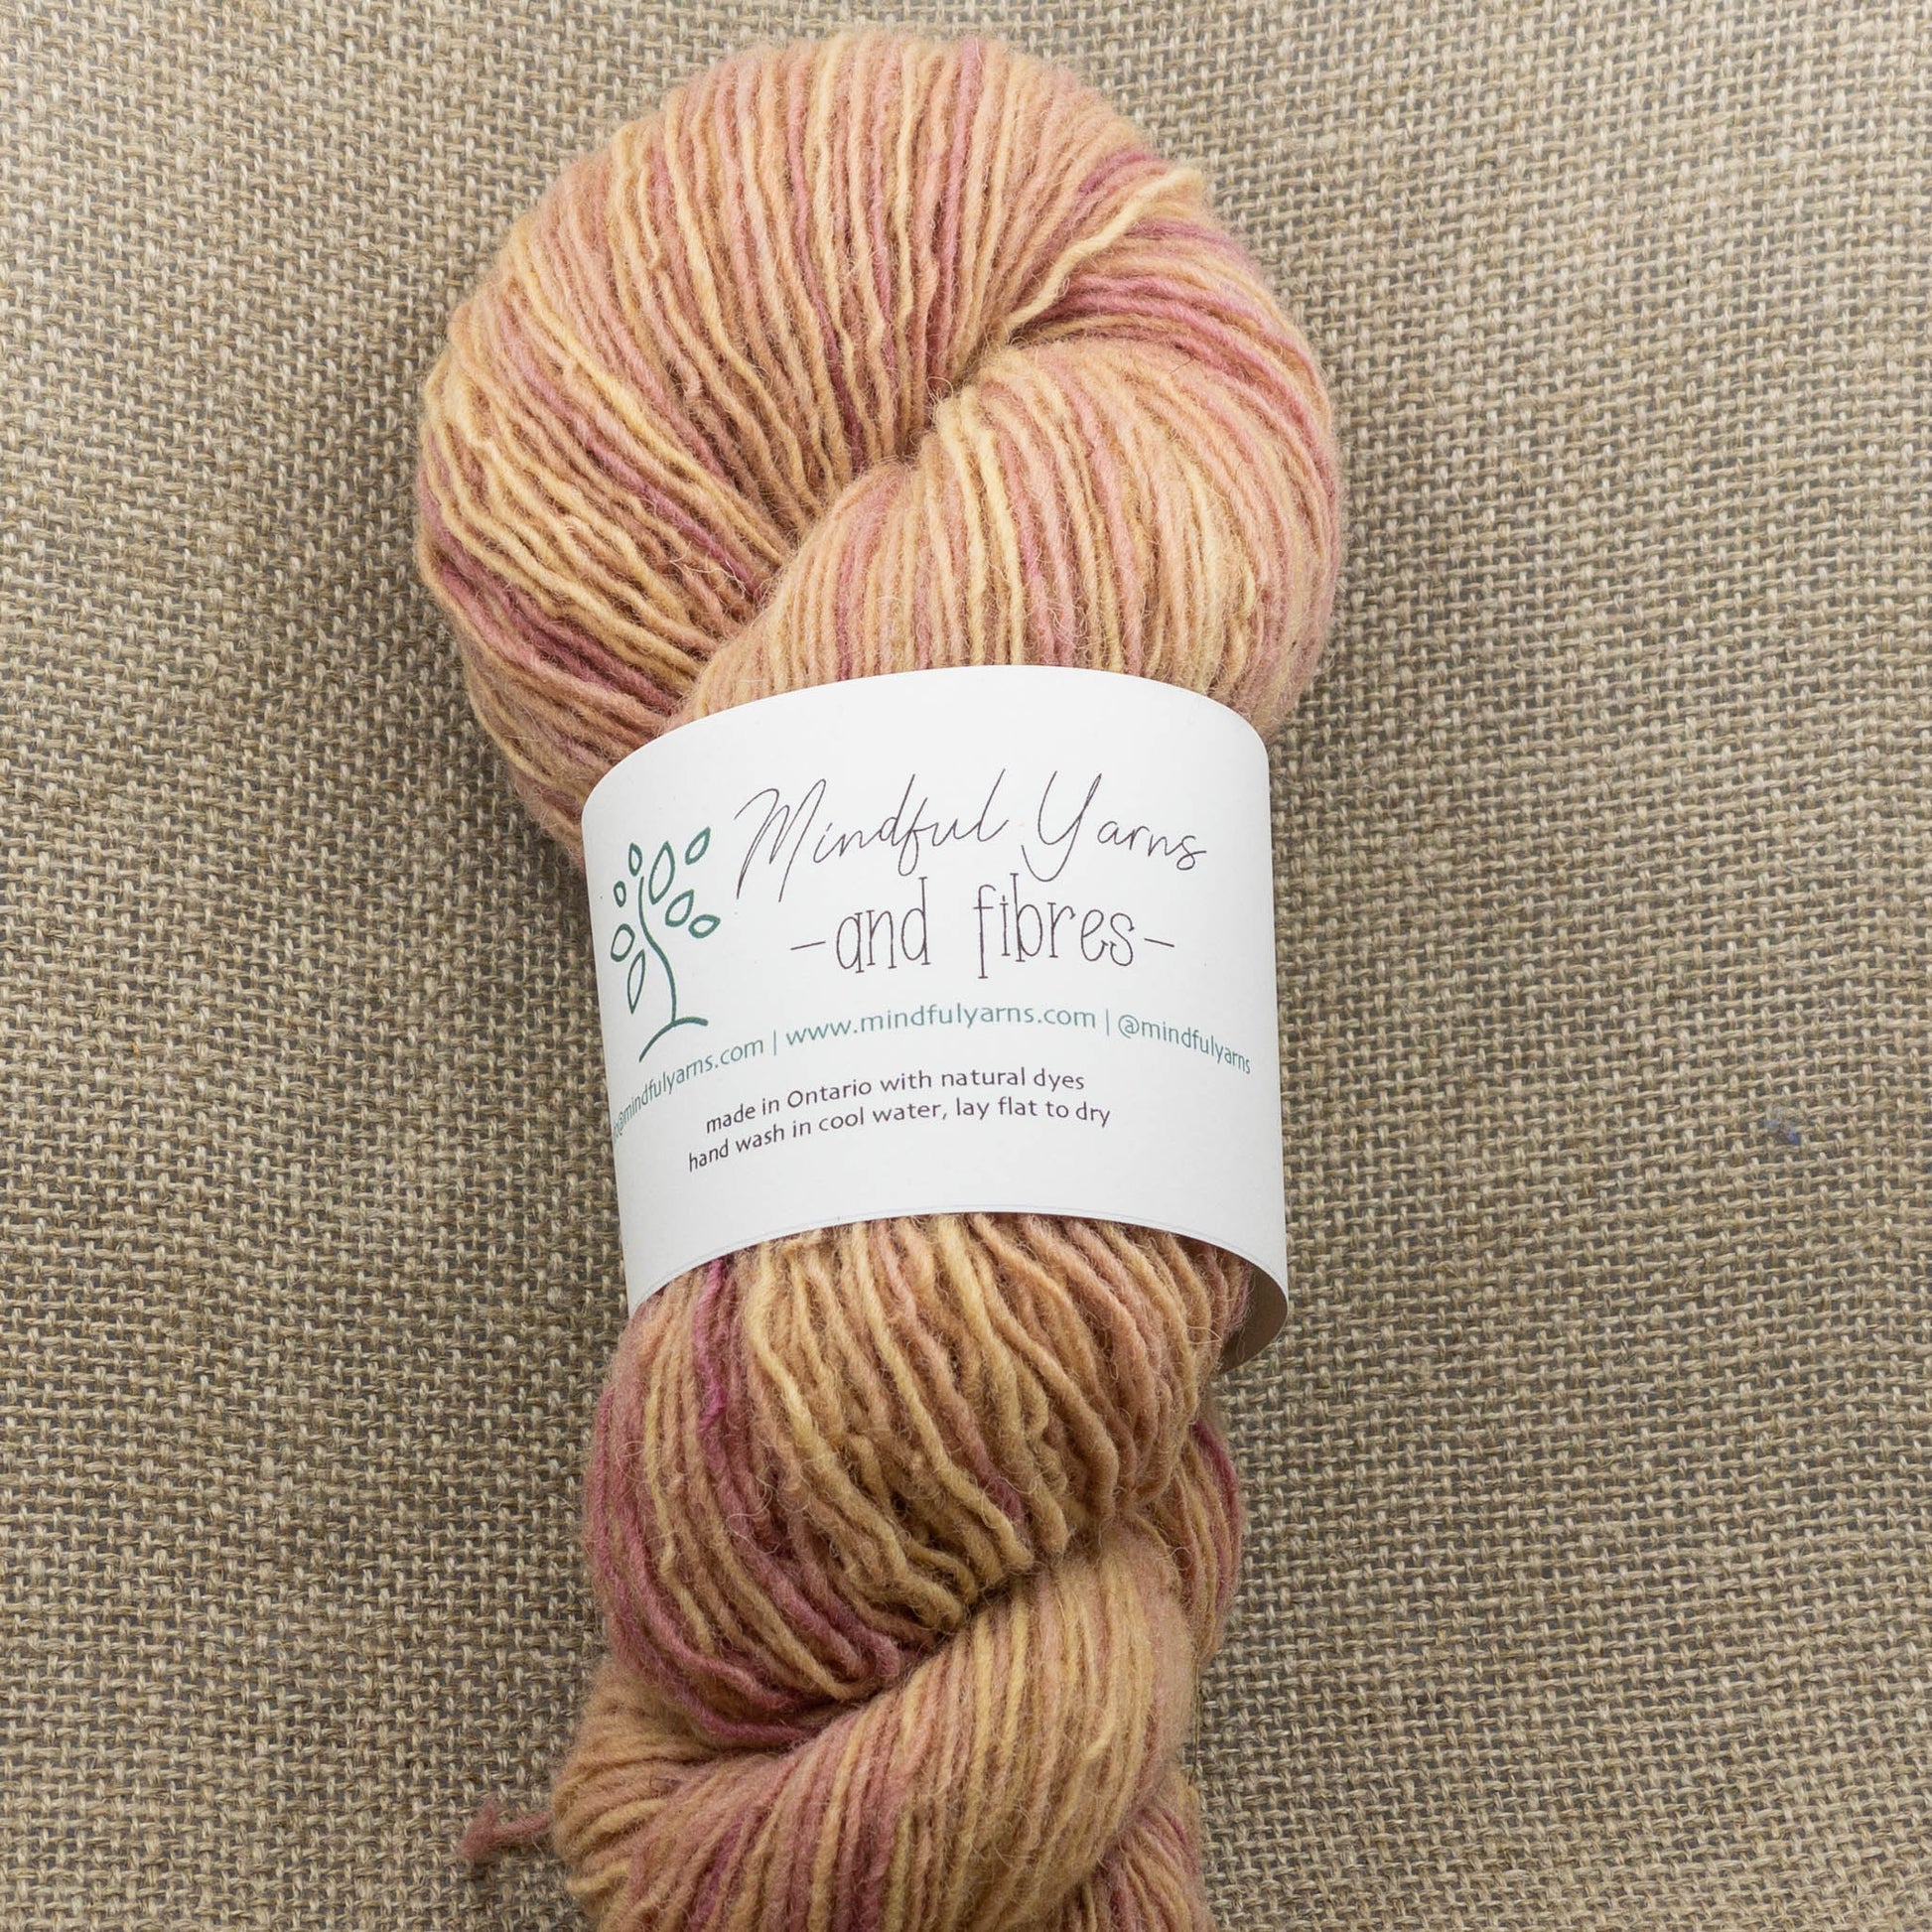 Ontario Single Fingering Weight Wool - Mindful Yarns - Quebracho + cochineal 0410